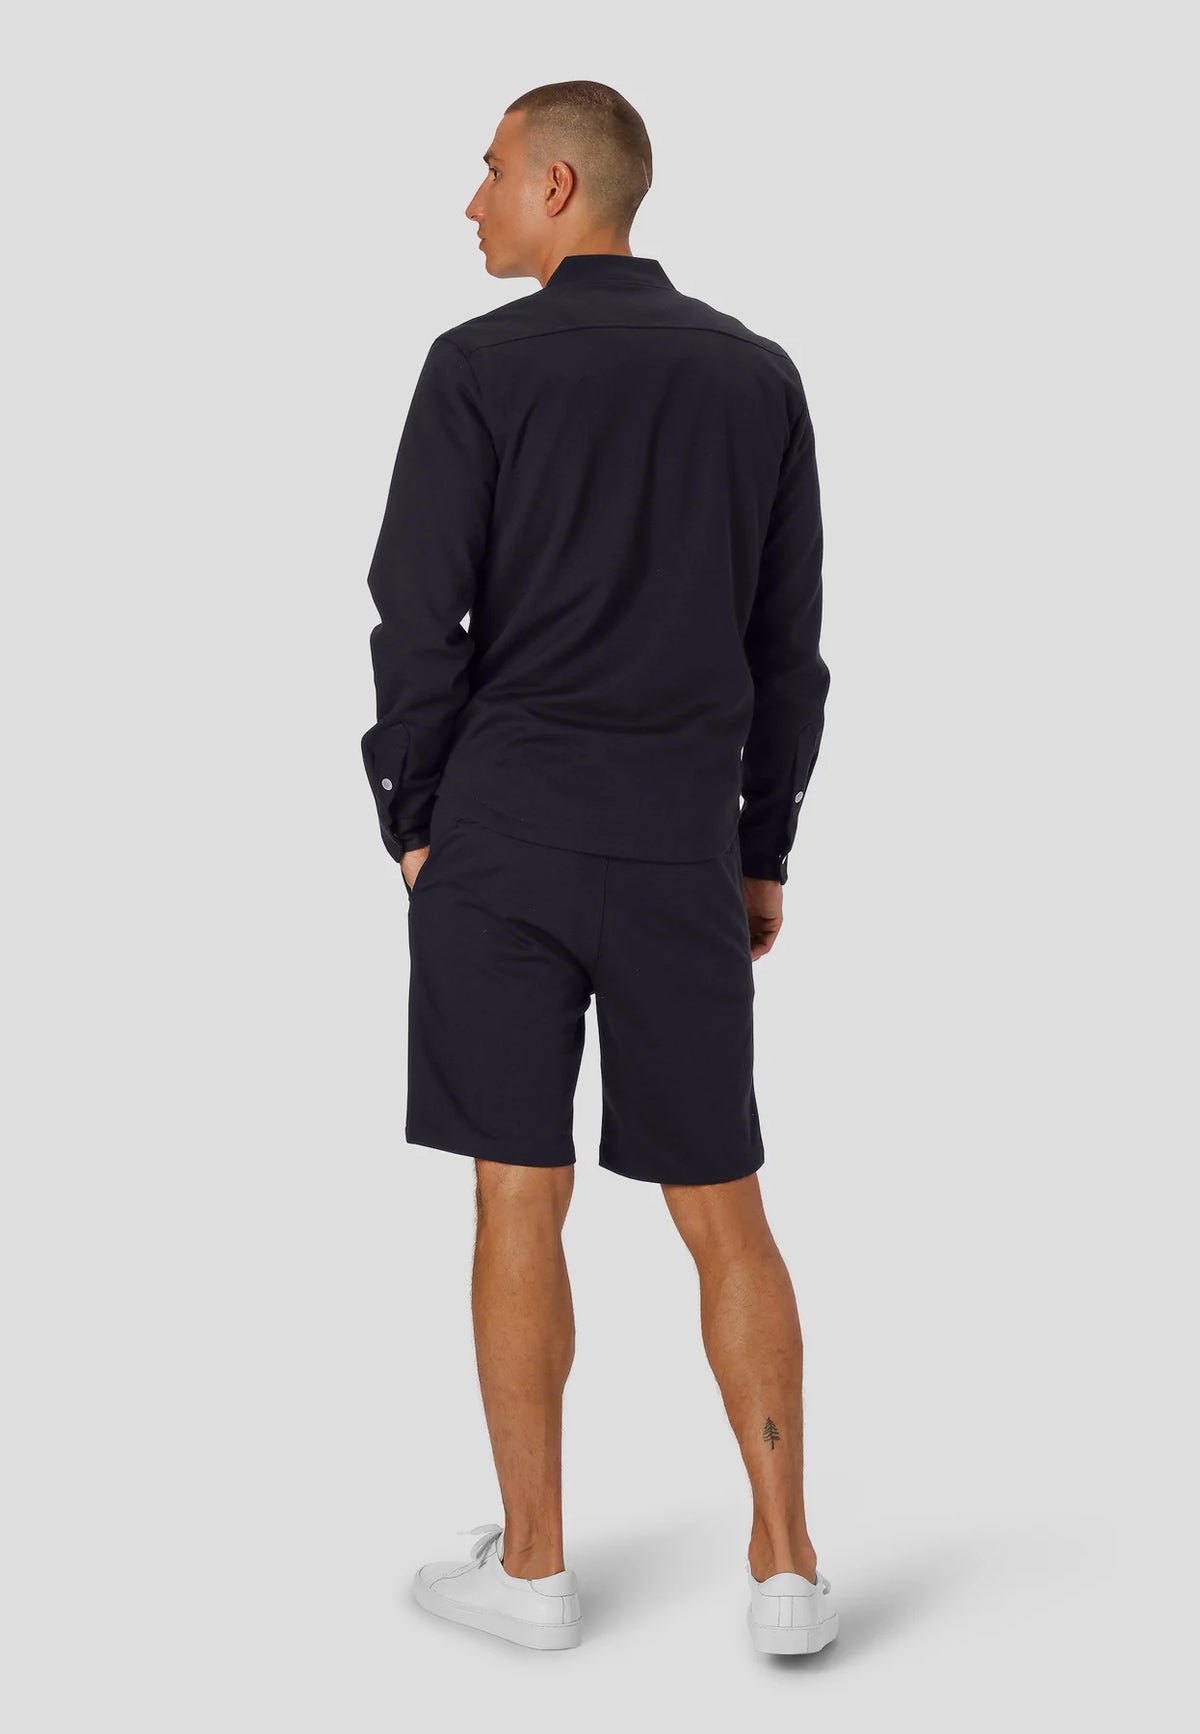 Clean Cut Copenhagen Milano Jersey Shorts